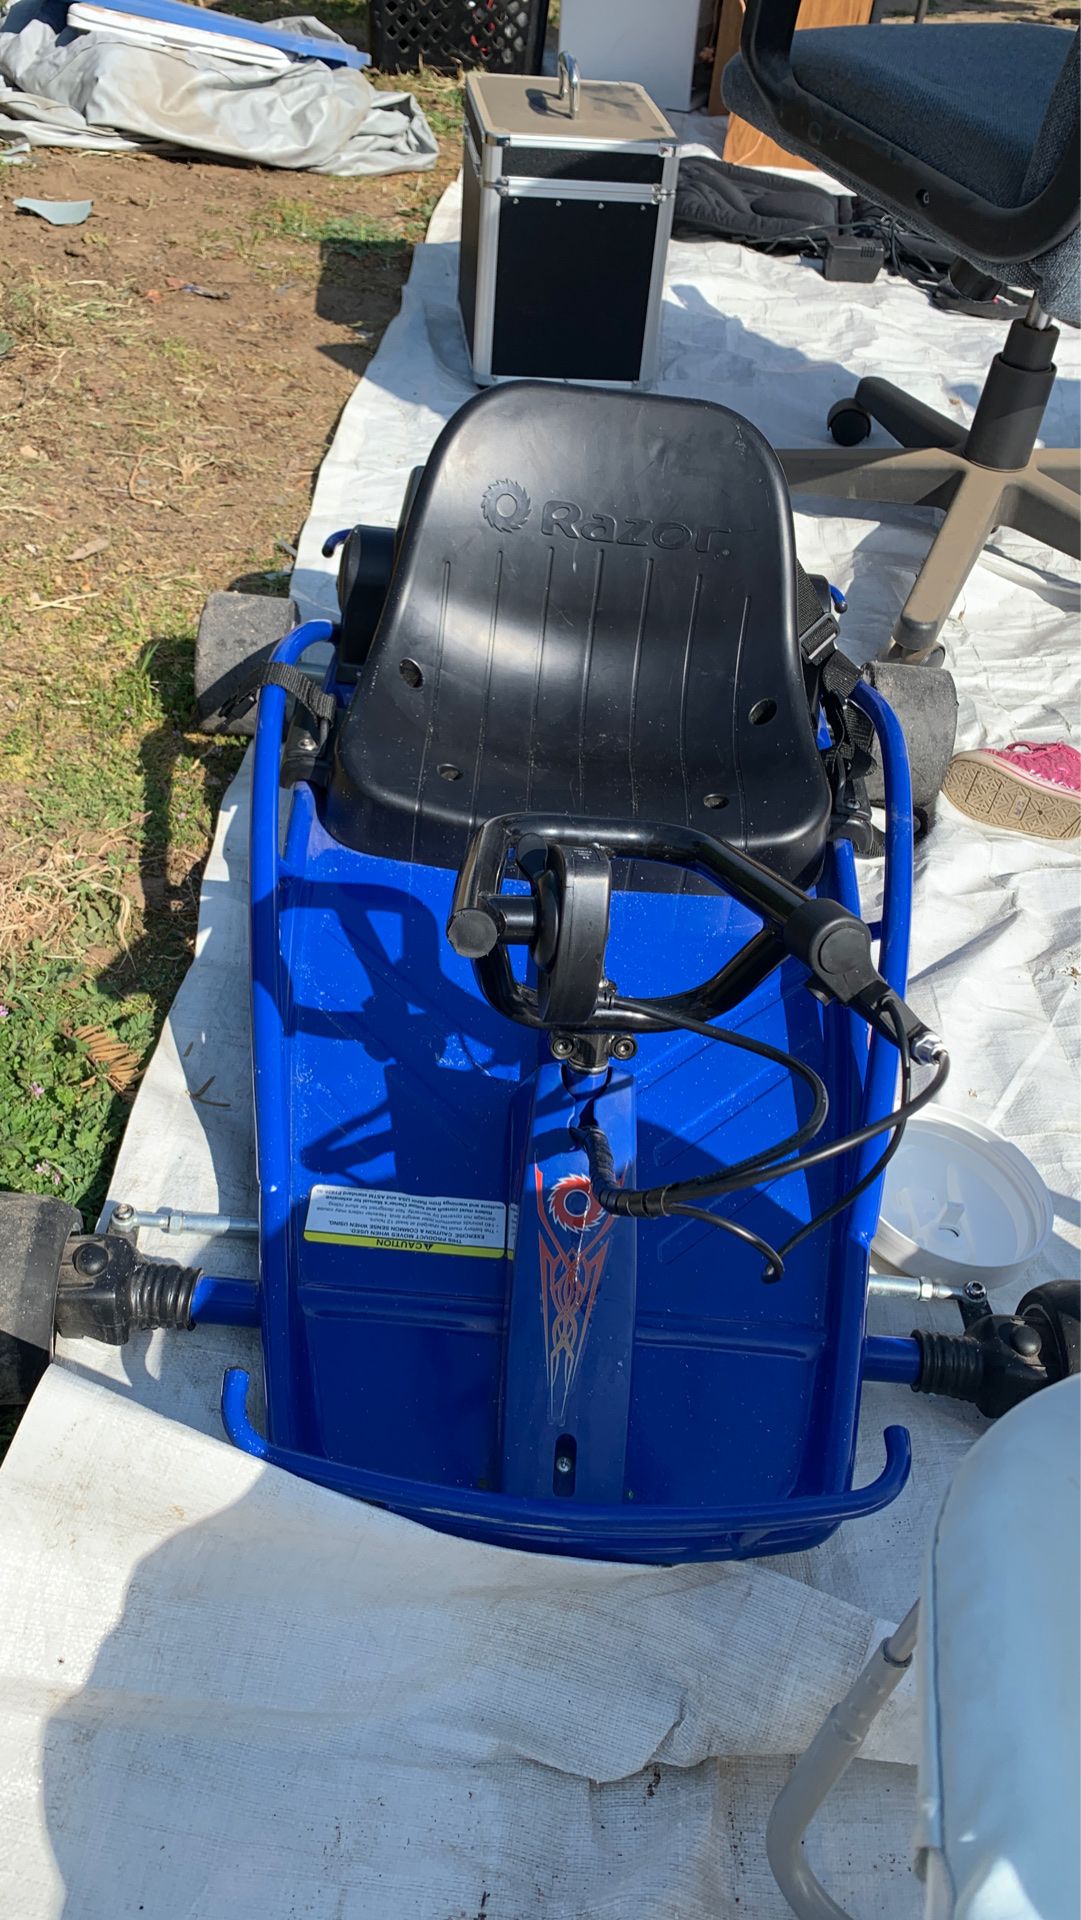 Razor electric go-Kart $200